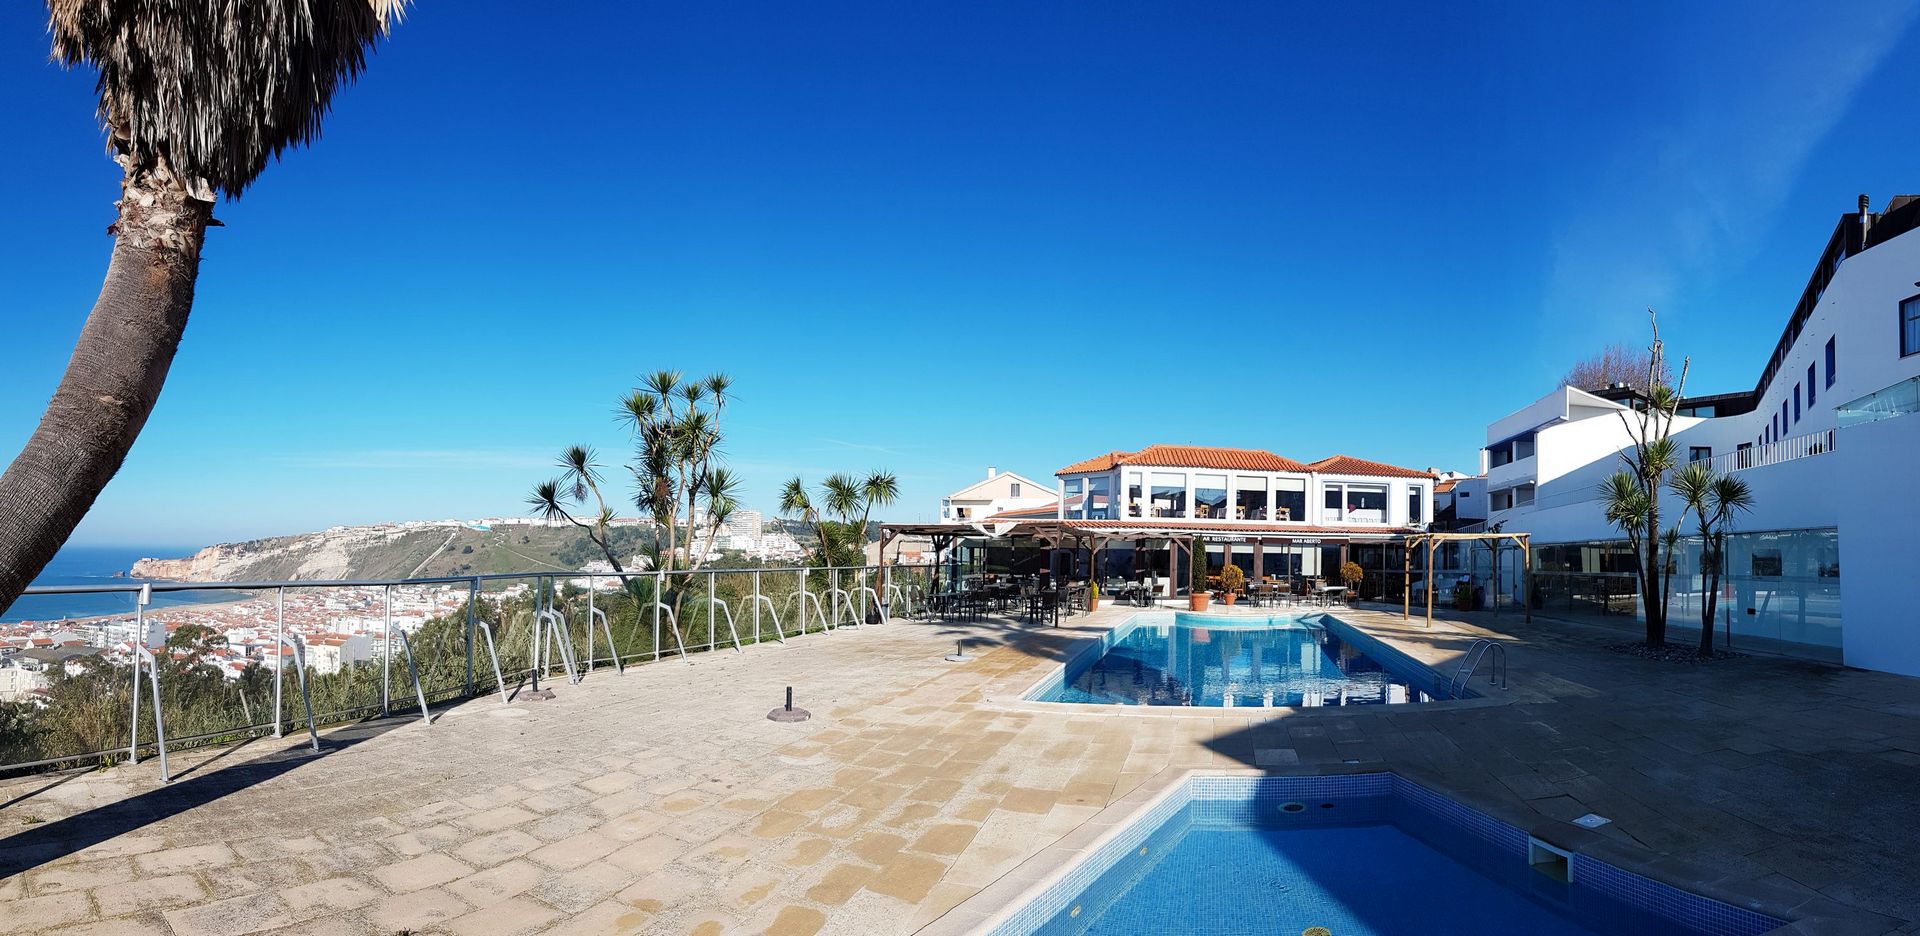 Nazare-Miramar-hotel-spa-piscina-vista-mar